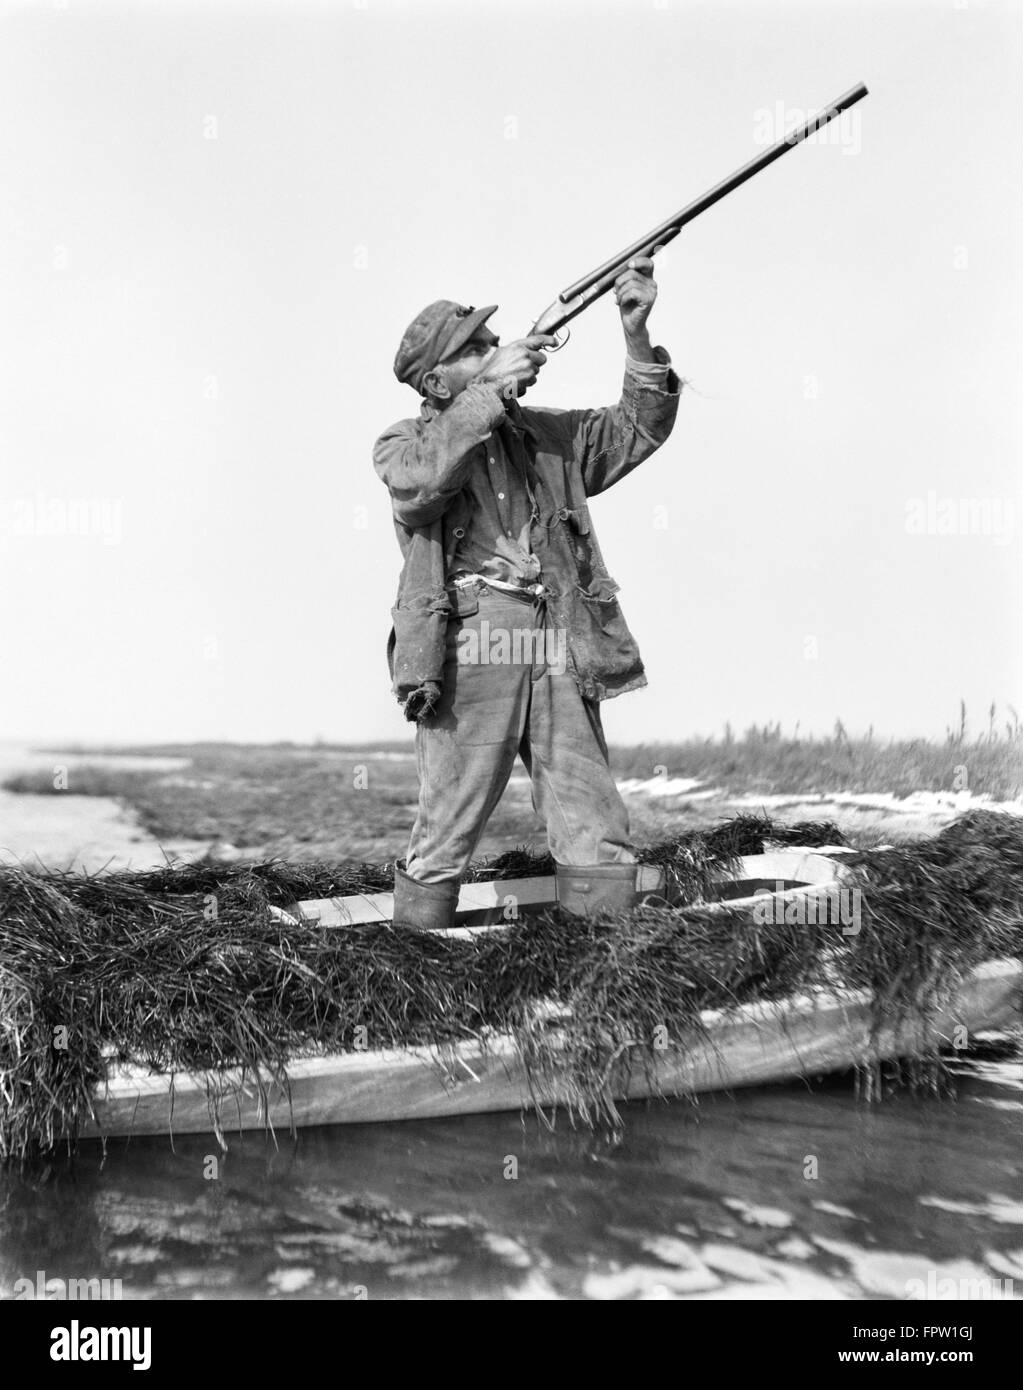 1920er Jahre Mann Entenjagd stehen IN SNEAKBOX Boot IN MARSH mit dem Ziel SCHROTFLINTE BARNEGAT BAY NEW JERSEY USA Stockfoto